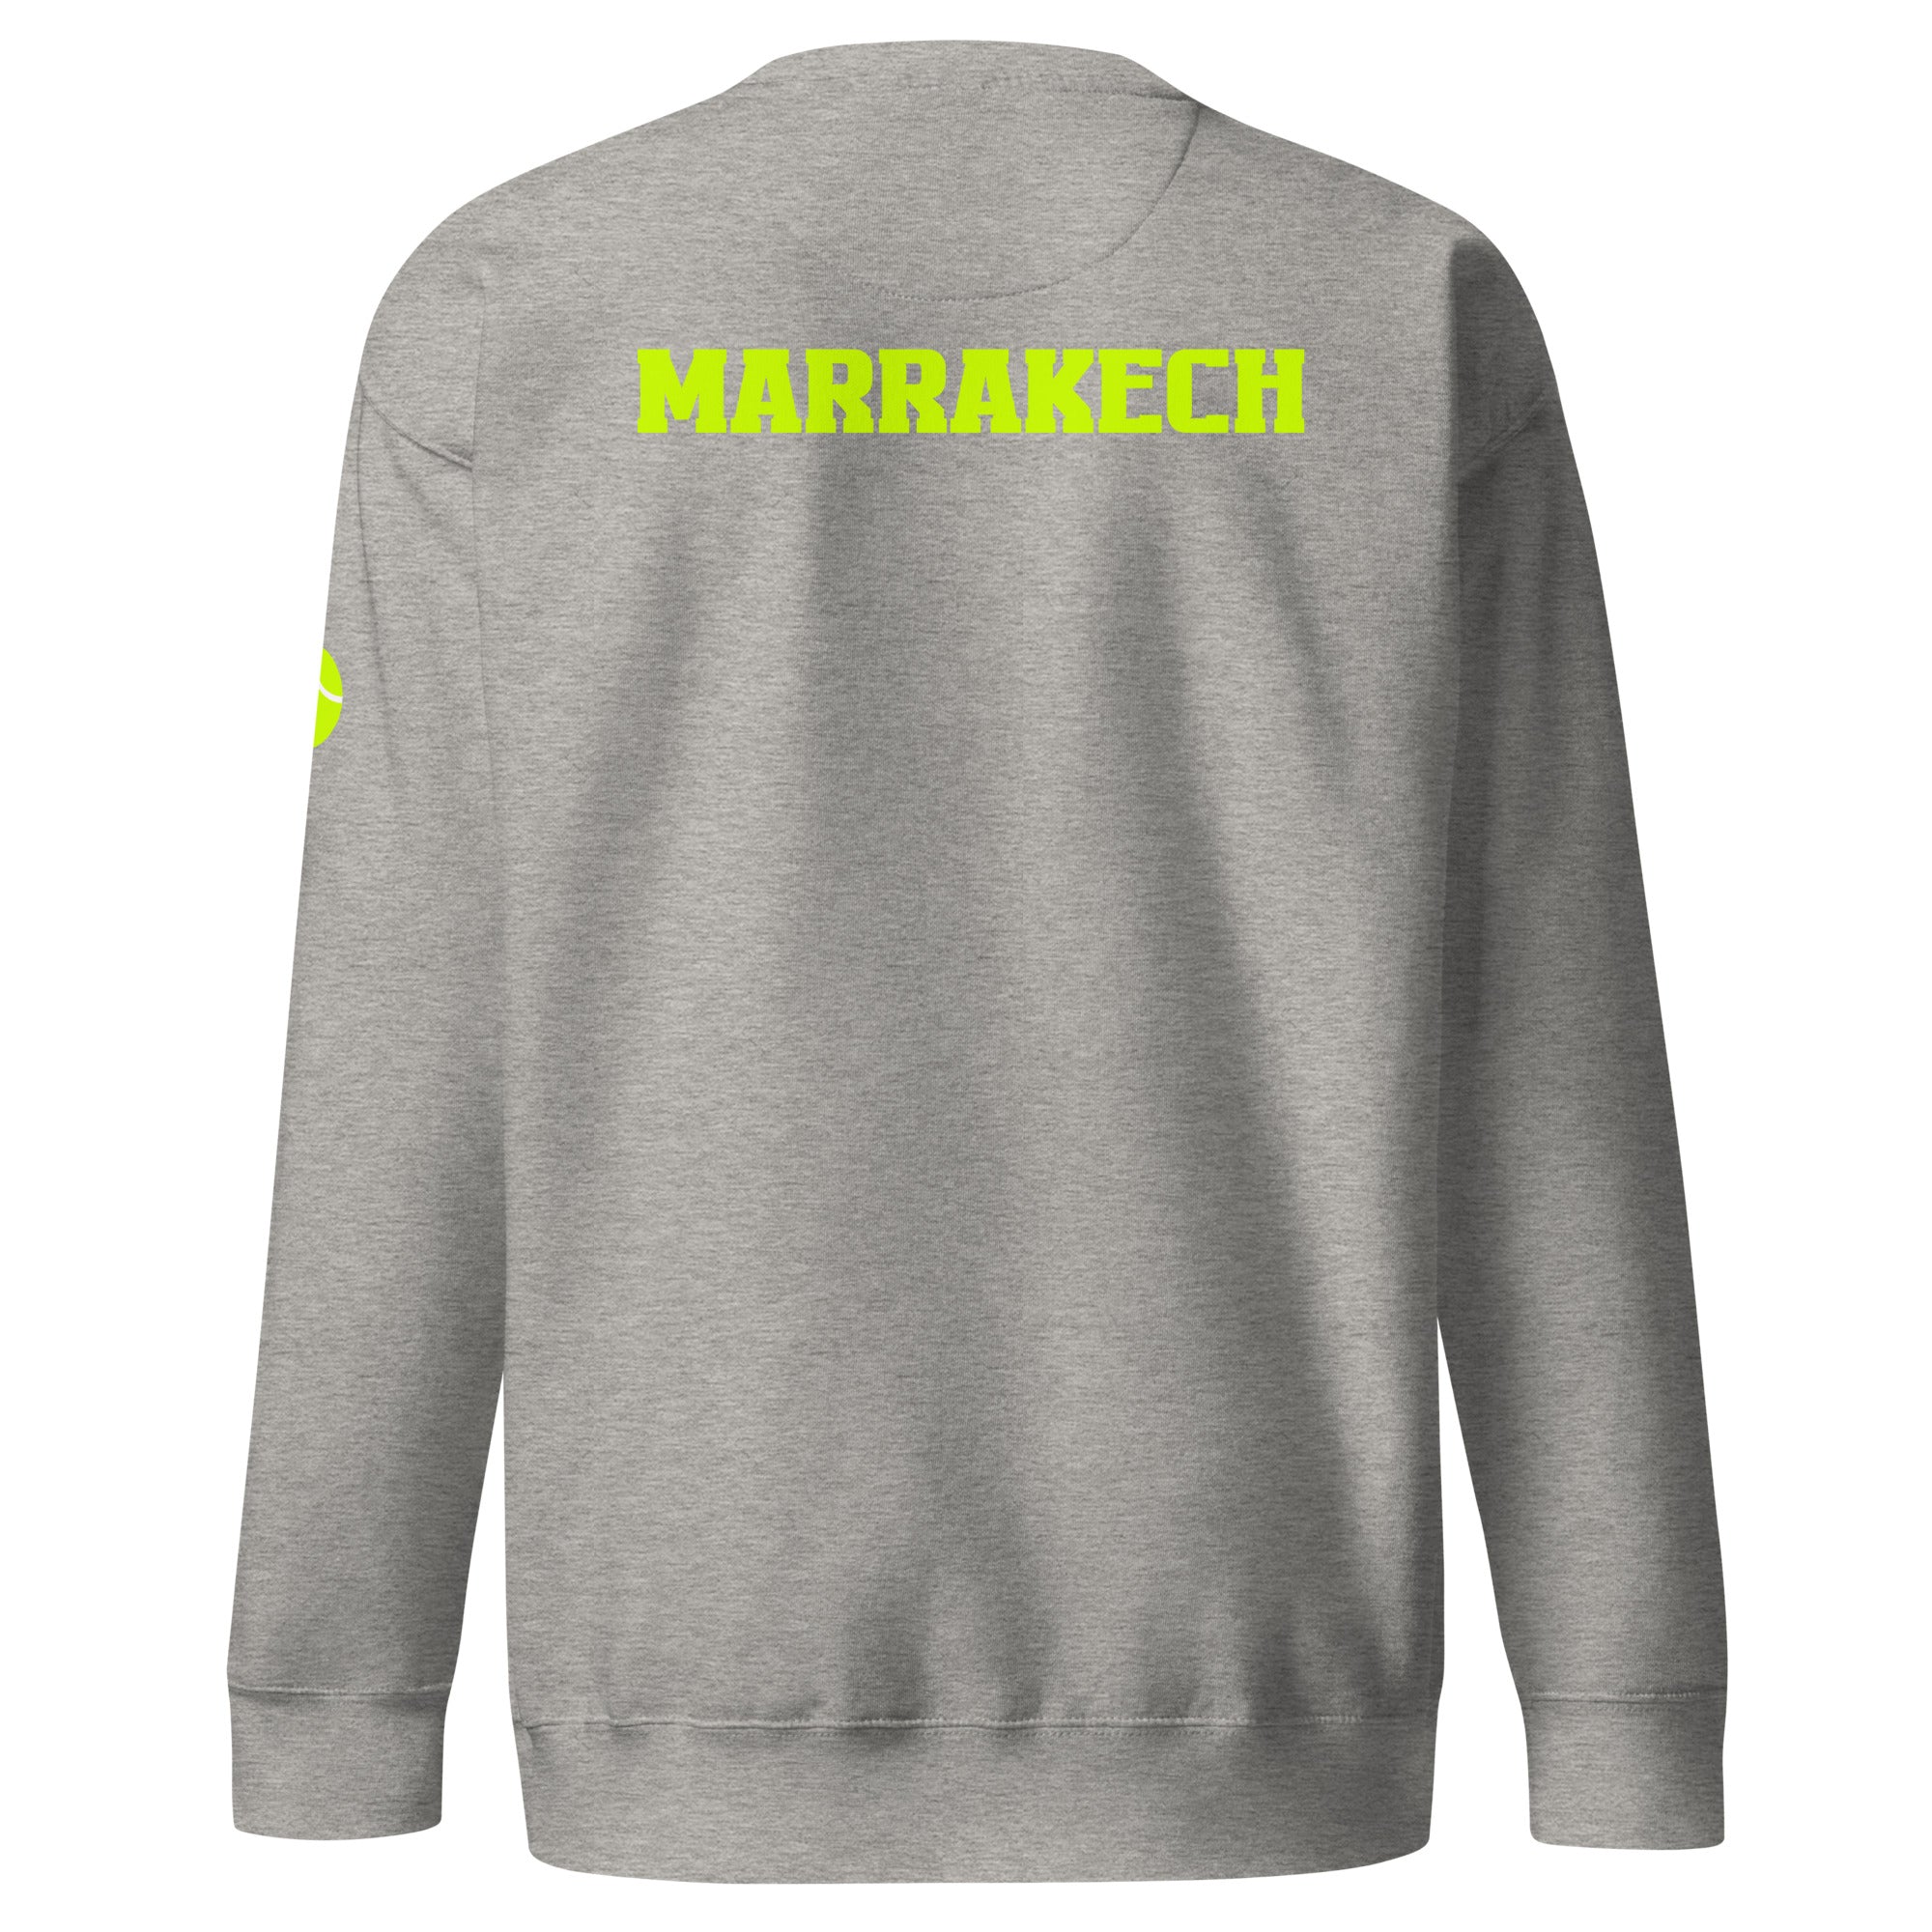 Unisex Premium Sweatshirt - Tennis Masters Marrakech - GRAPHIC T-SHIRTS